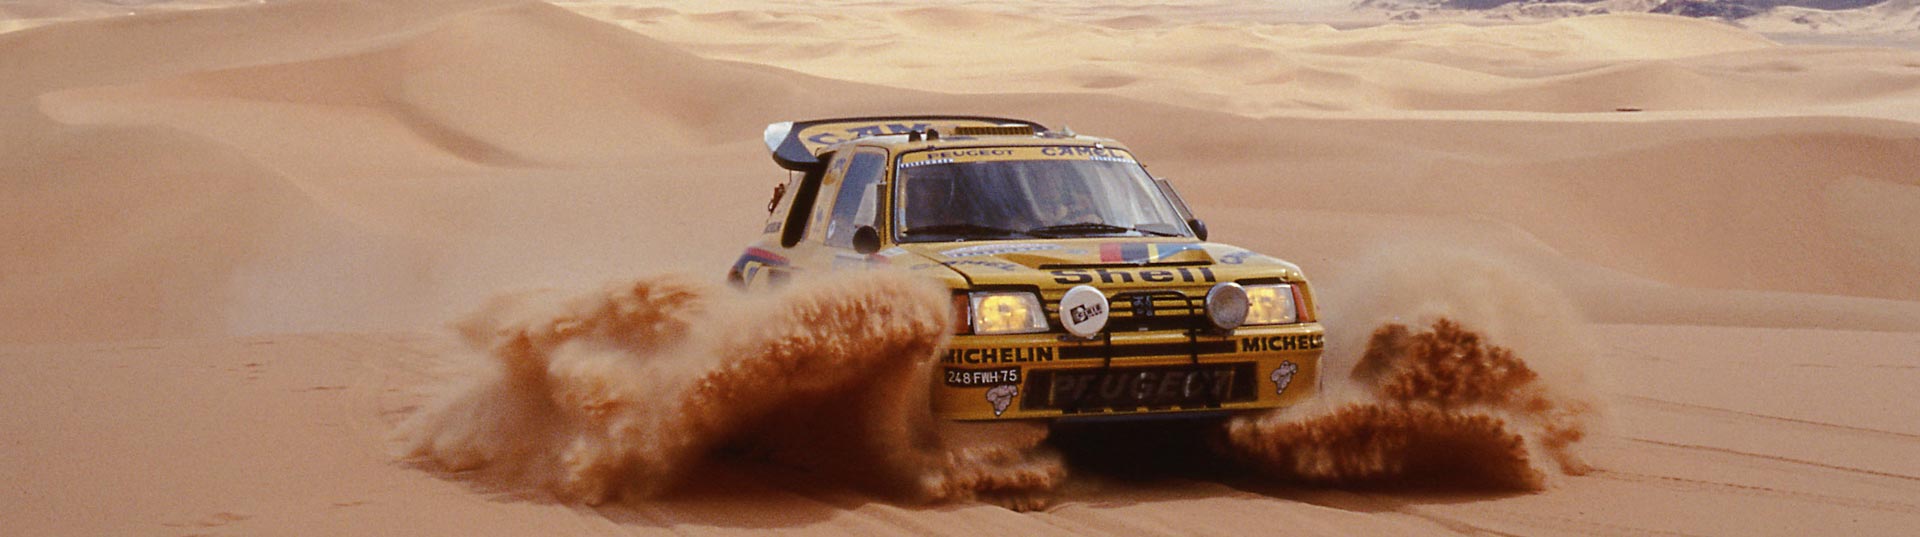 Peugeot e as 3 décadas de Dakar